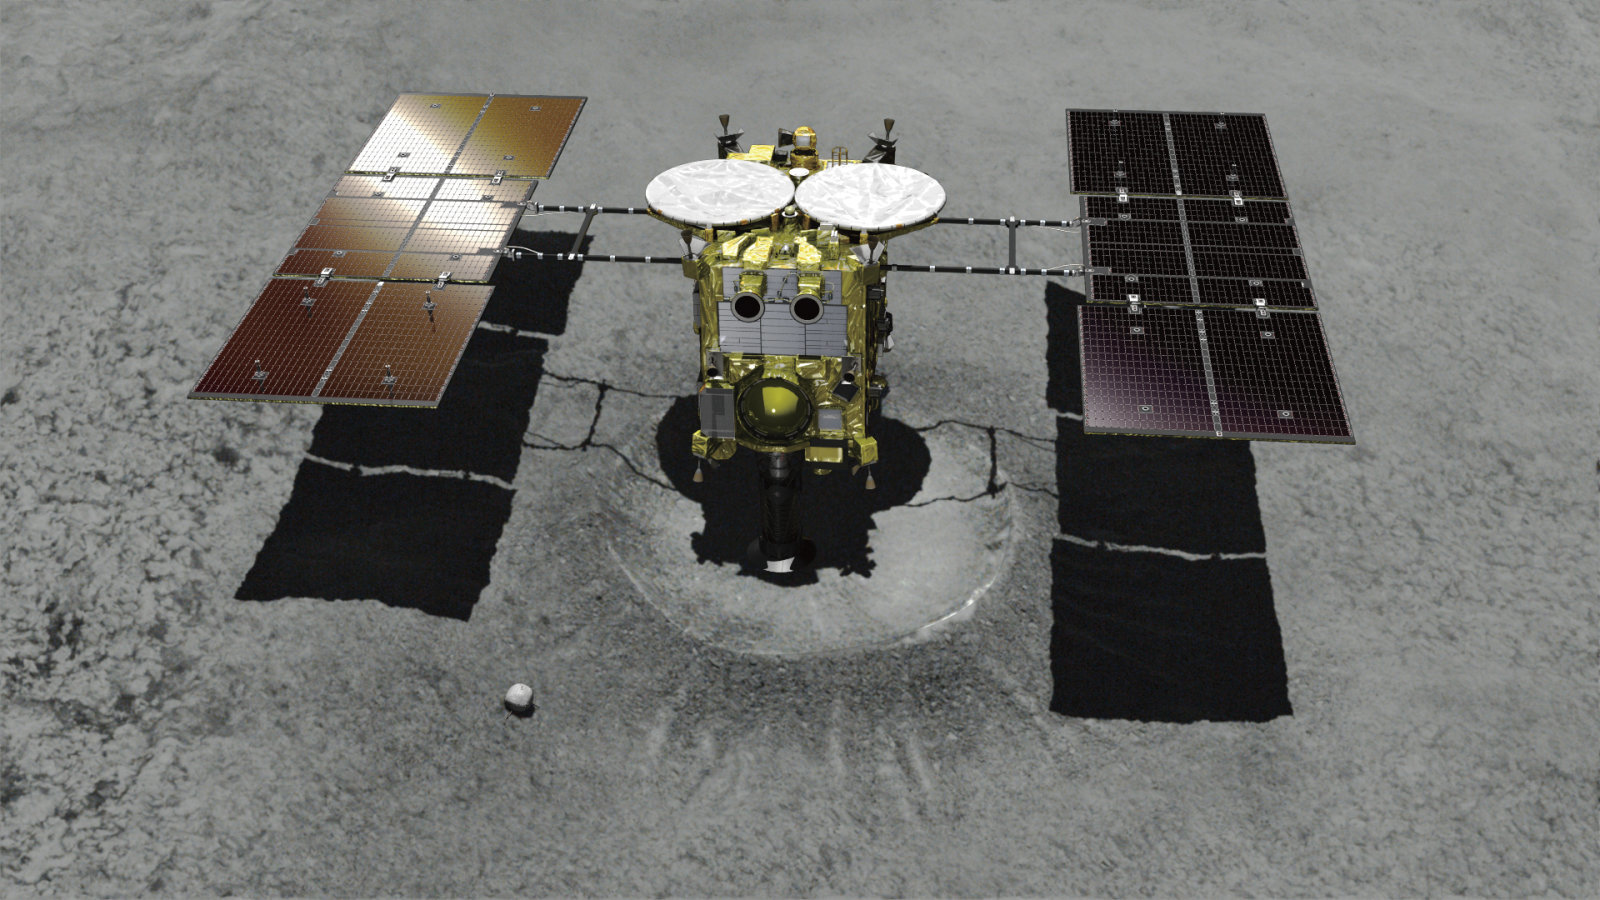 Hayabusa2’nin Ryugu asteroidine iniş videosu yayınlandı